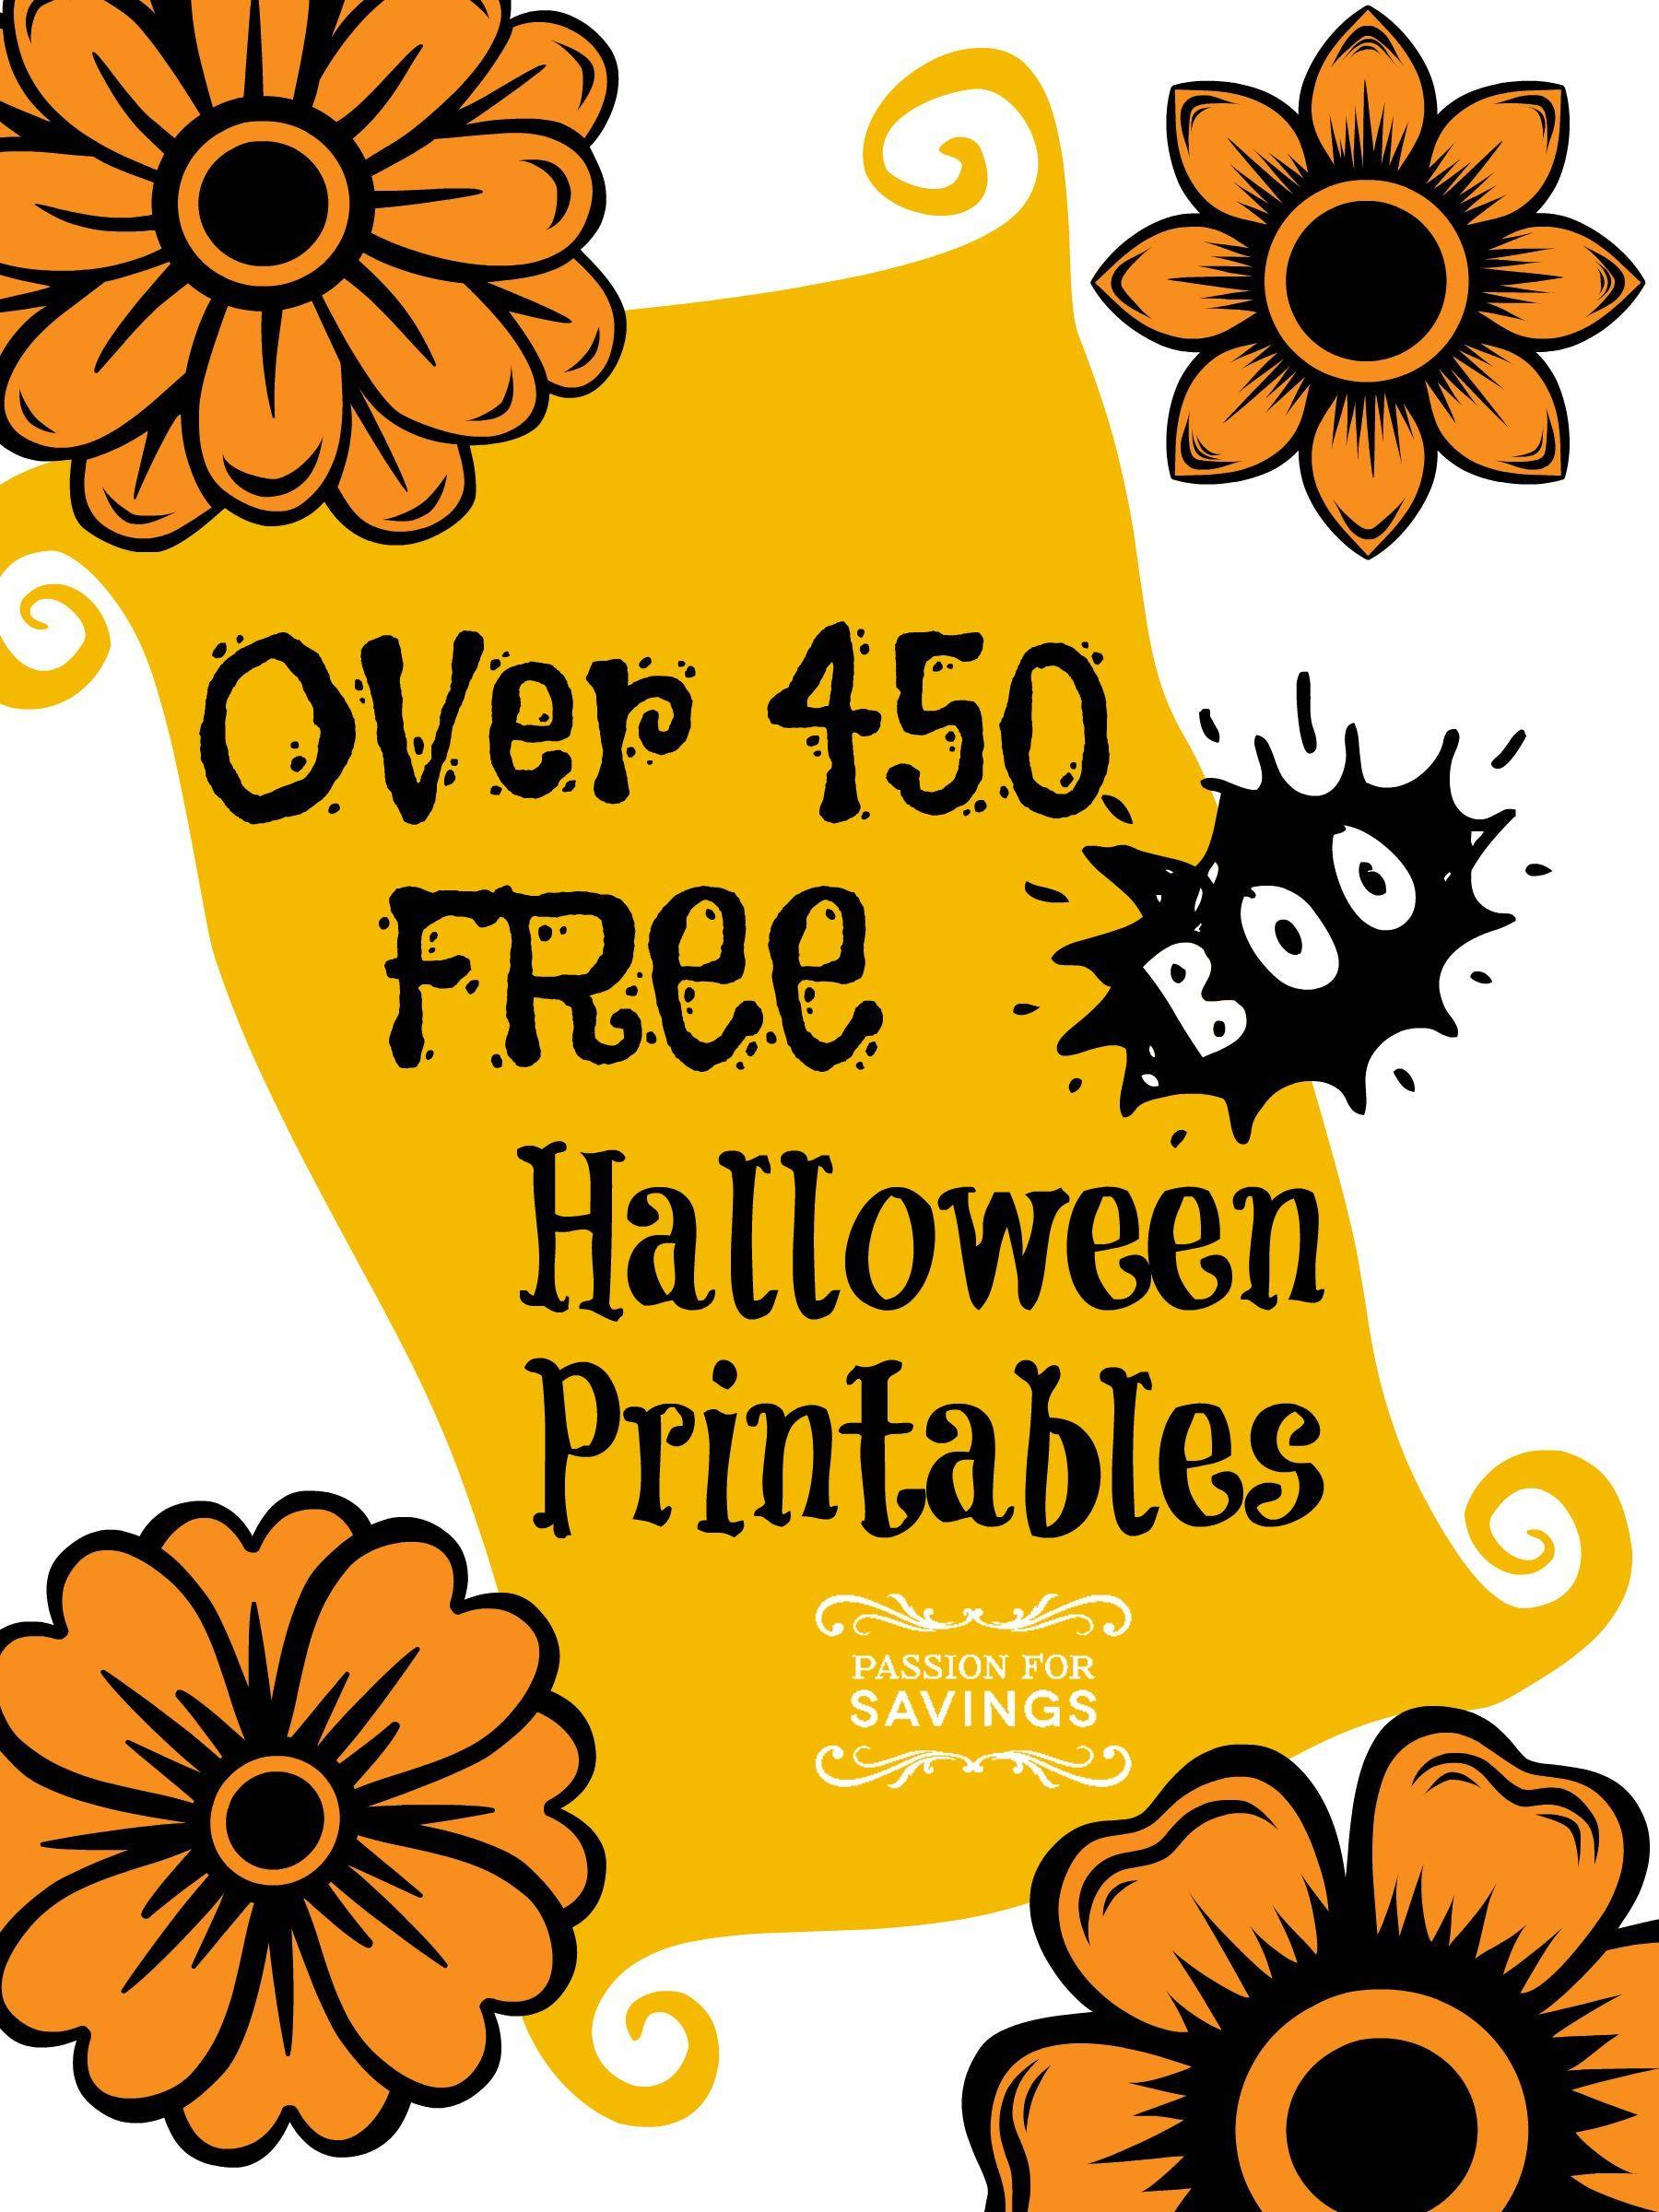 Download Free Halloween Invitations Image